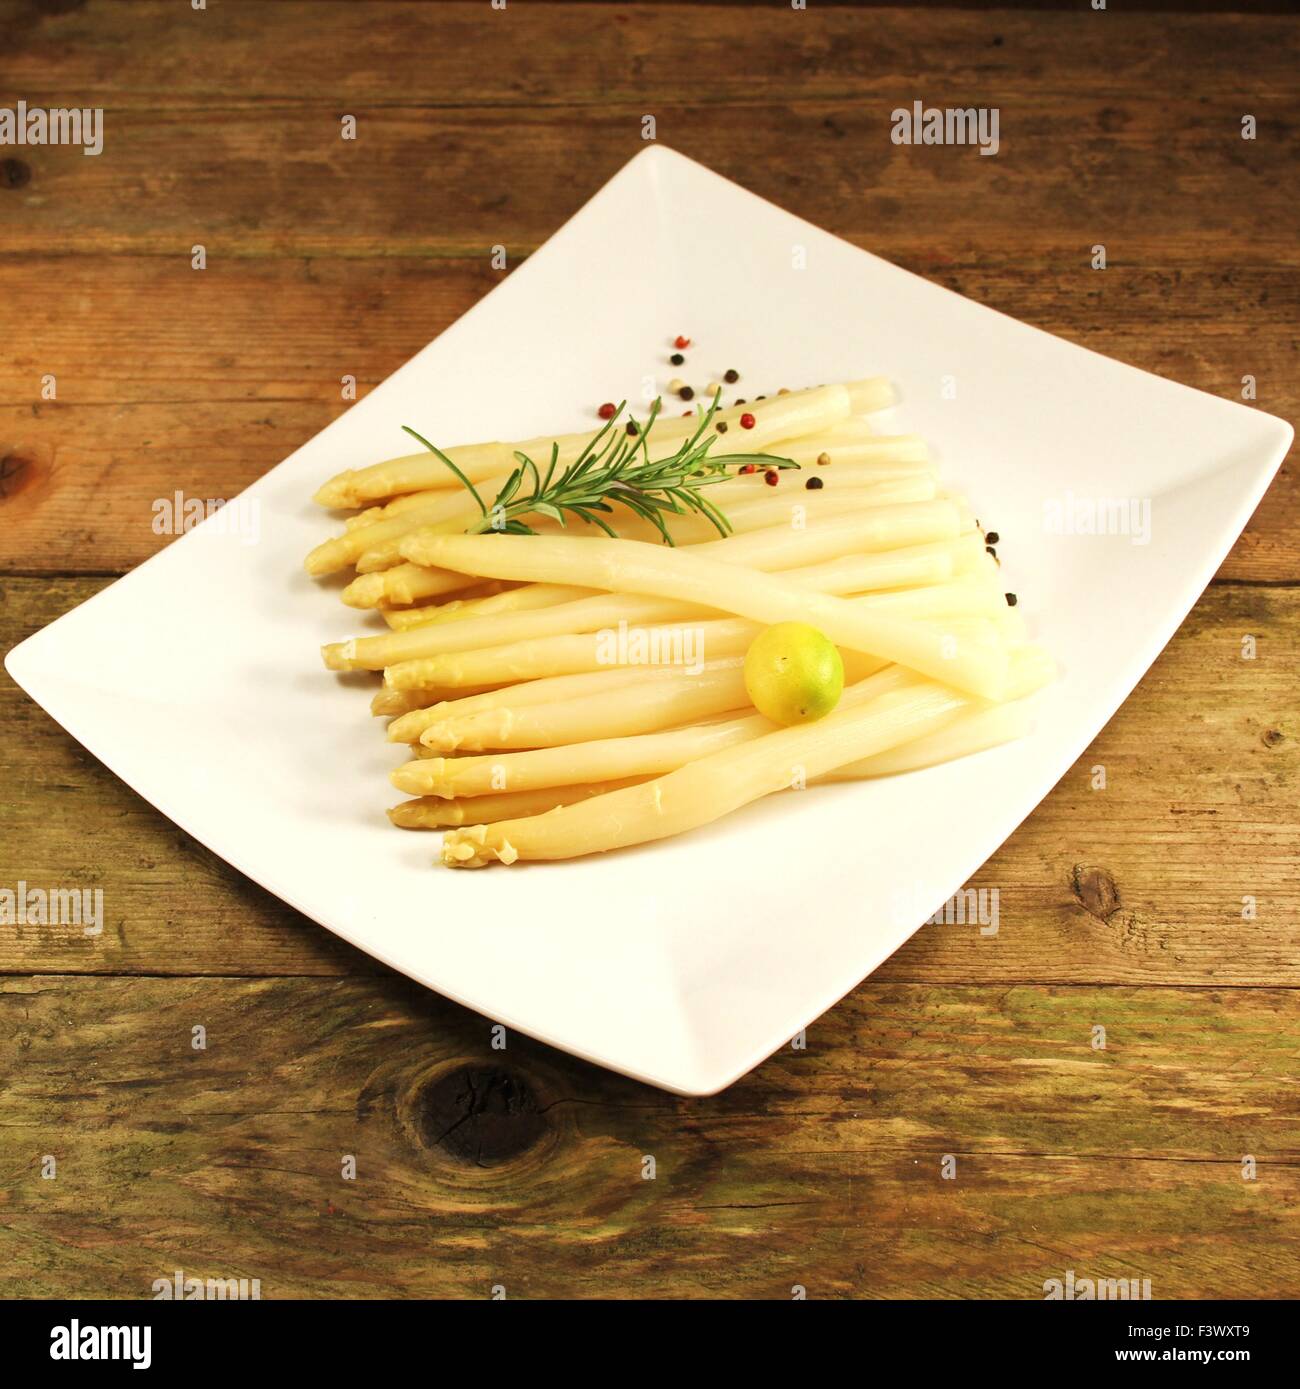 asparagi freschi Foto Stock